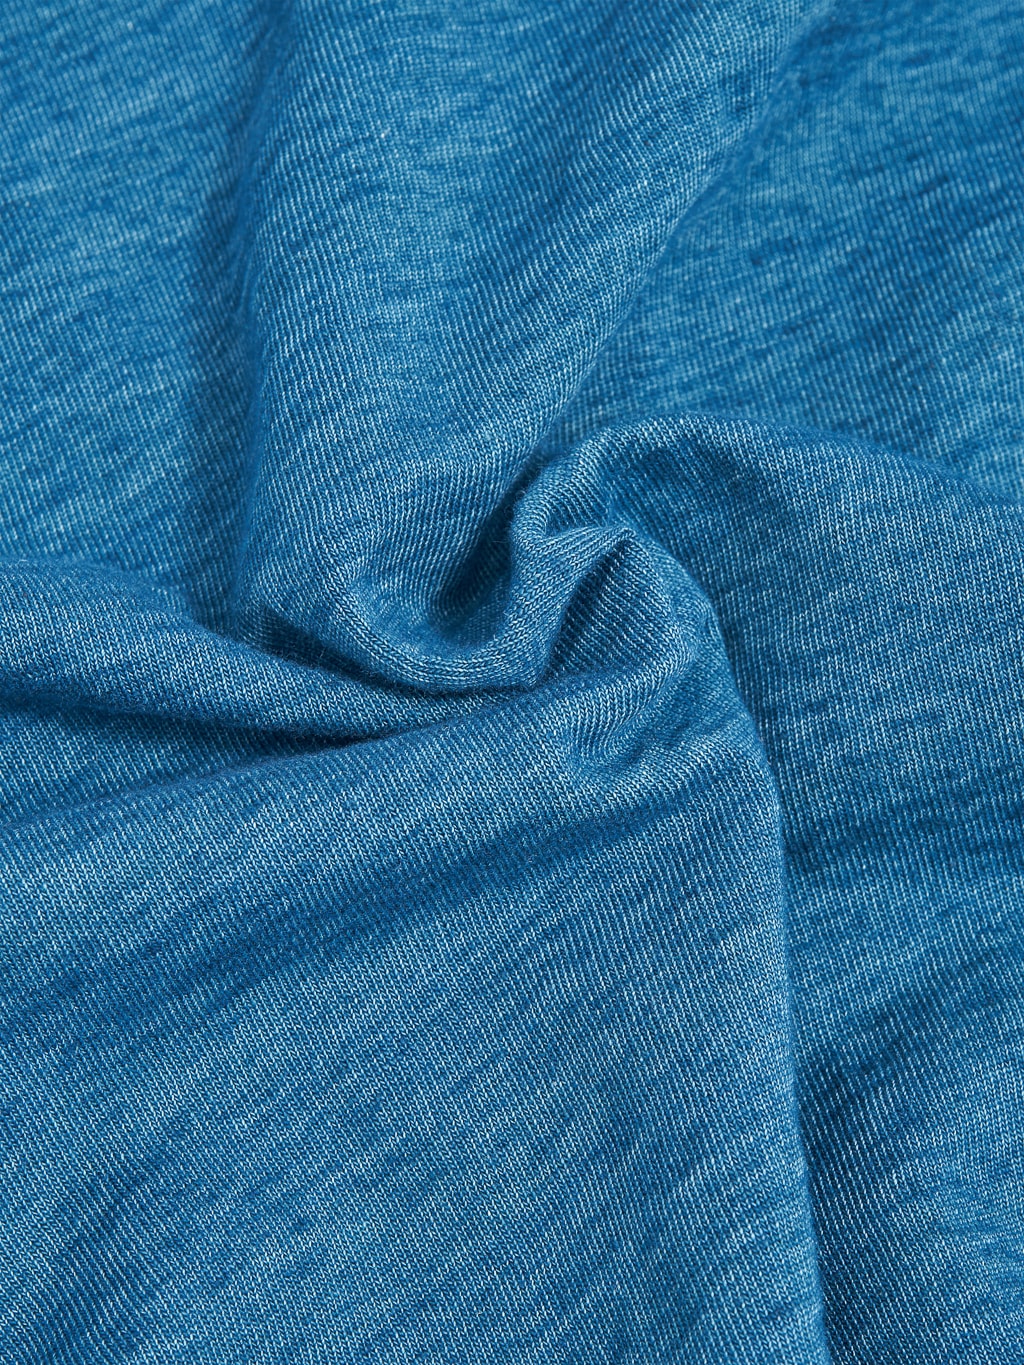 pure blue japan greencast tshirt fabric texture